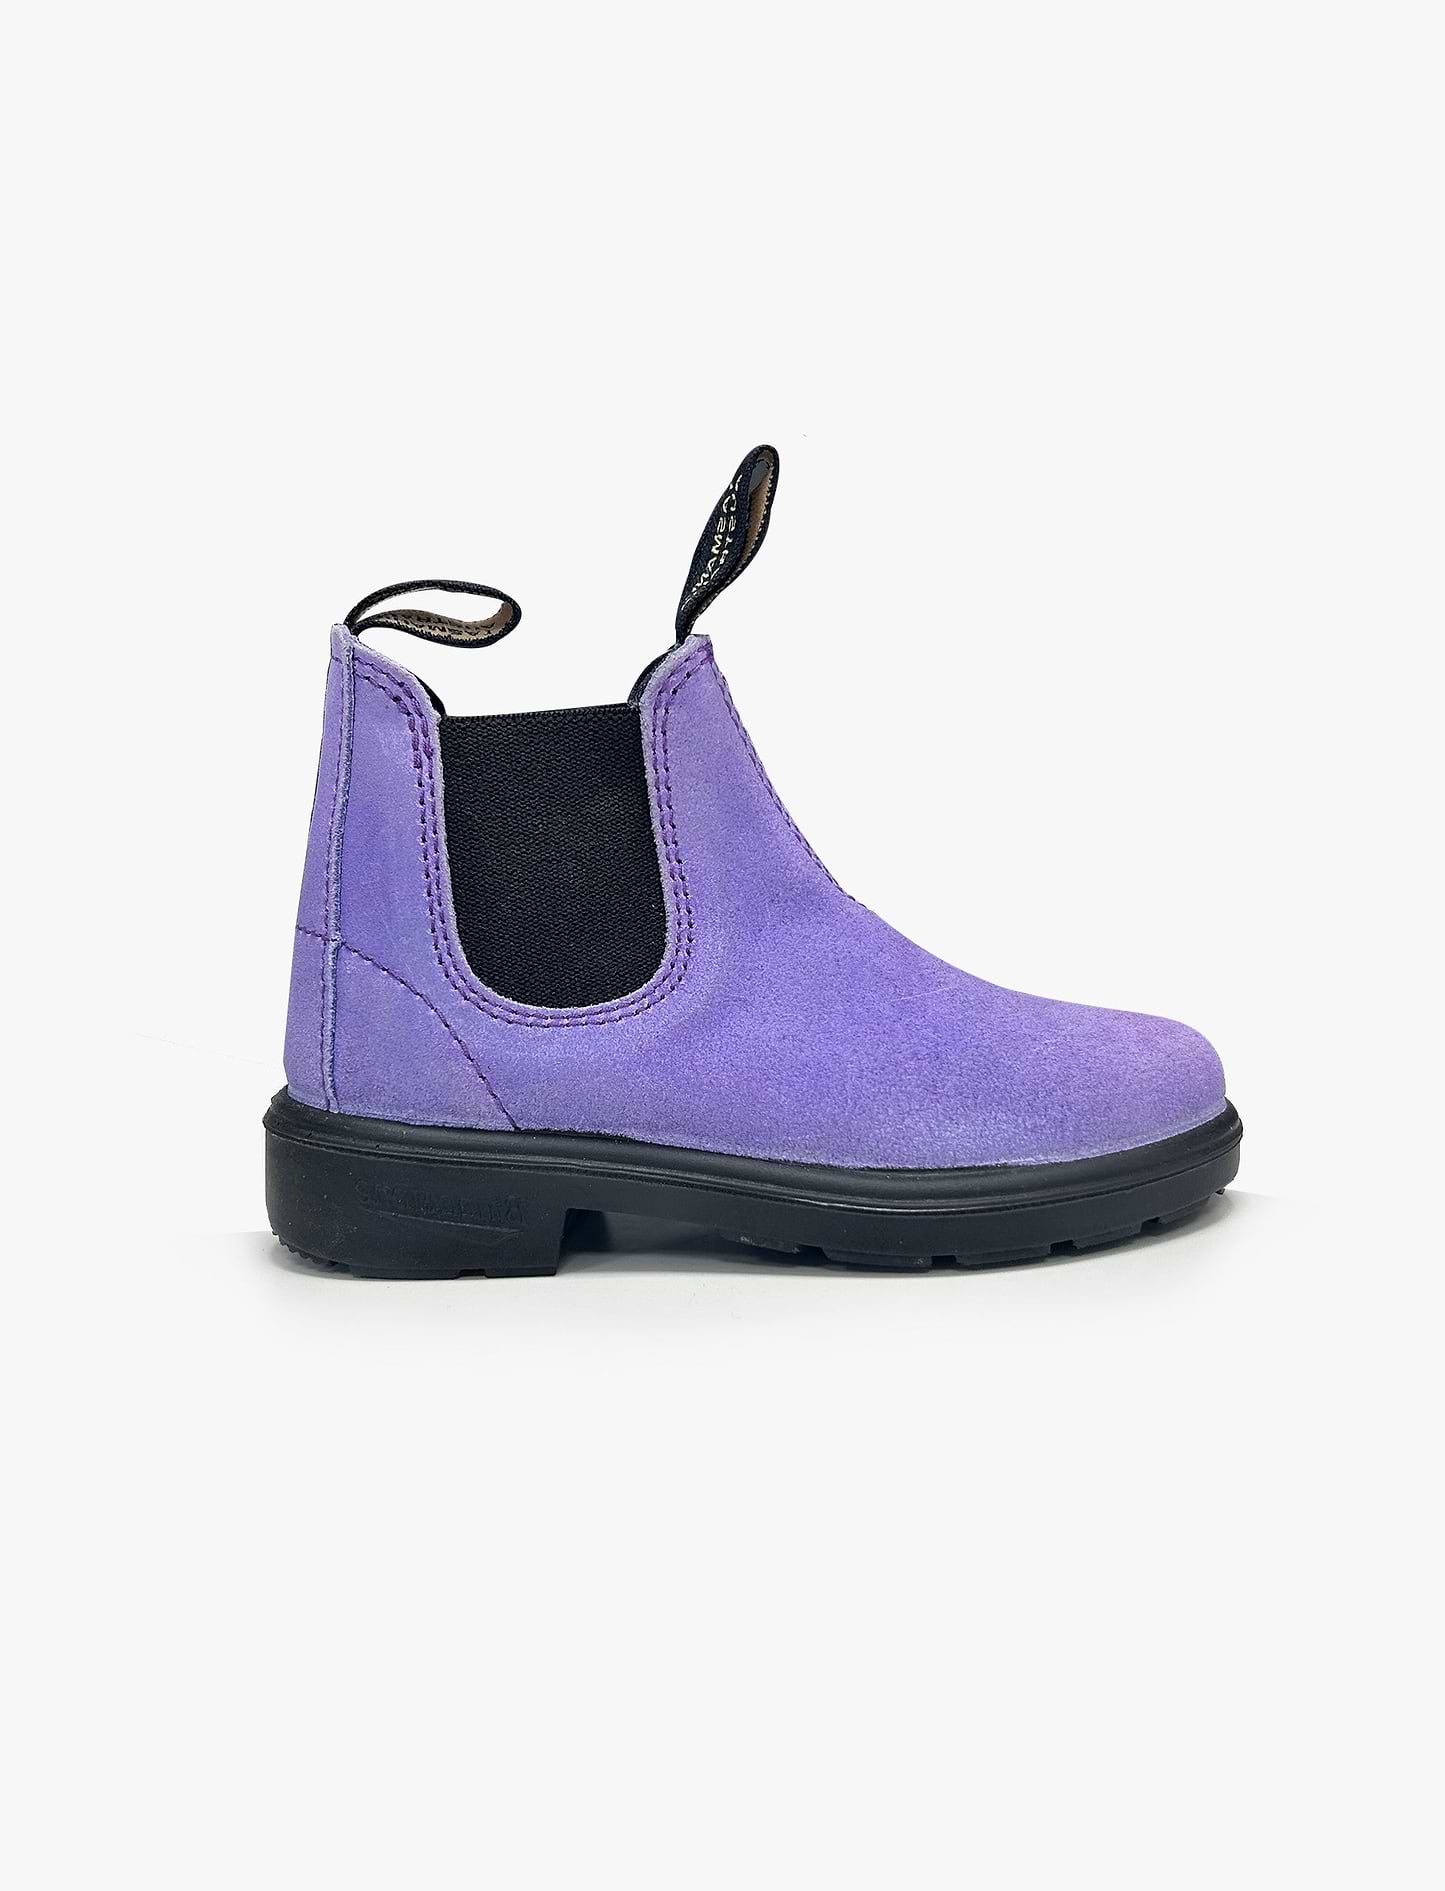 Blundtone 2491 - נעלי ילדים בלנסטון 2491 בצבע סגול